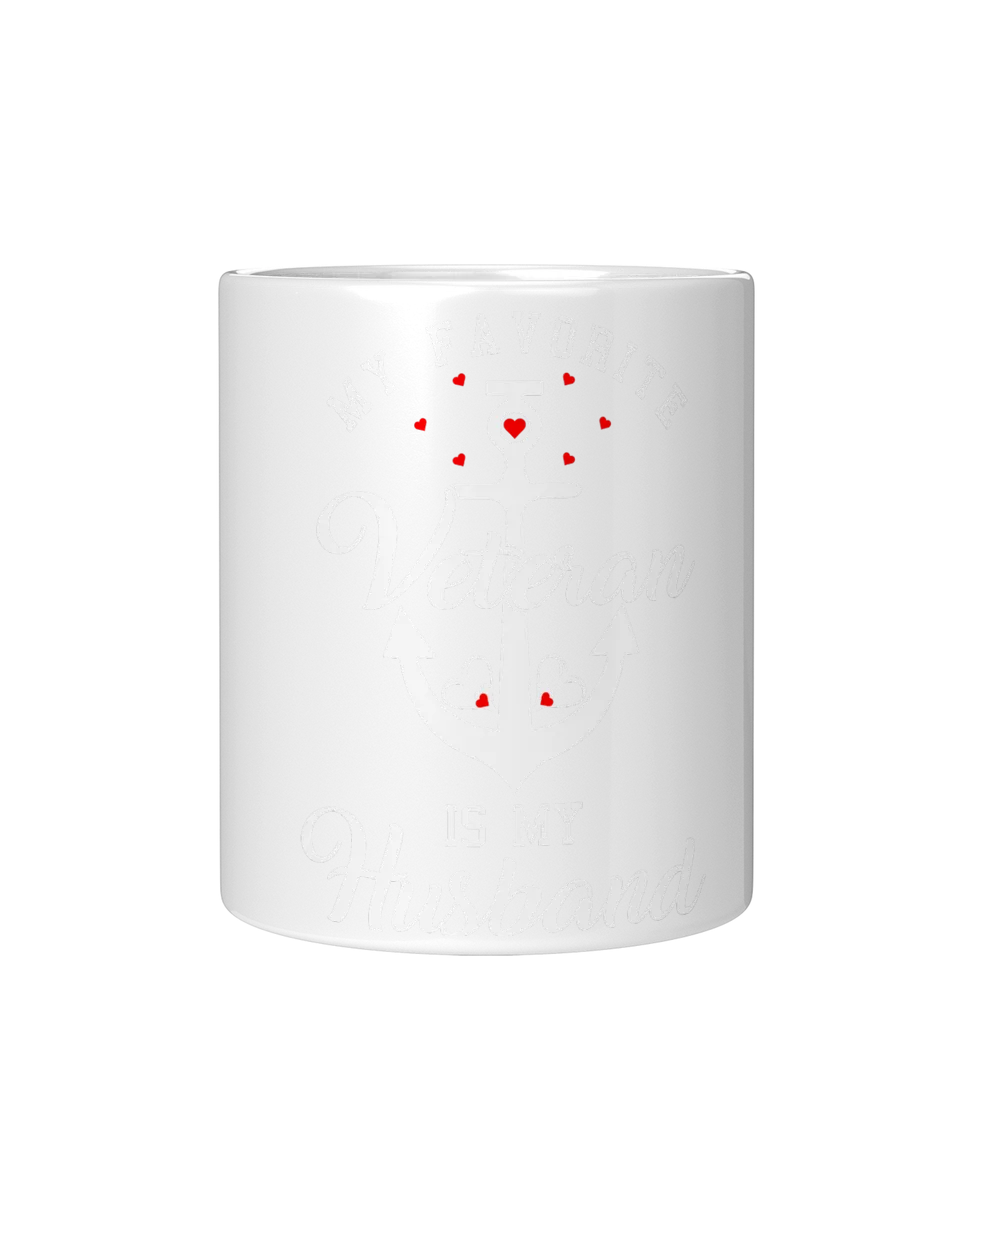 My Favorite Veteran Is my Husband T-Shirt